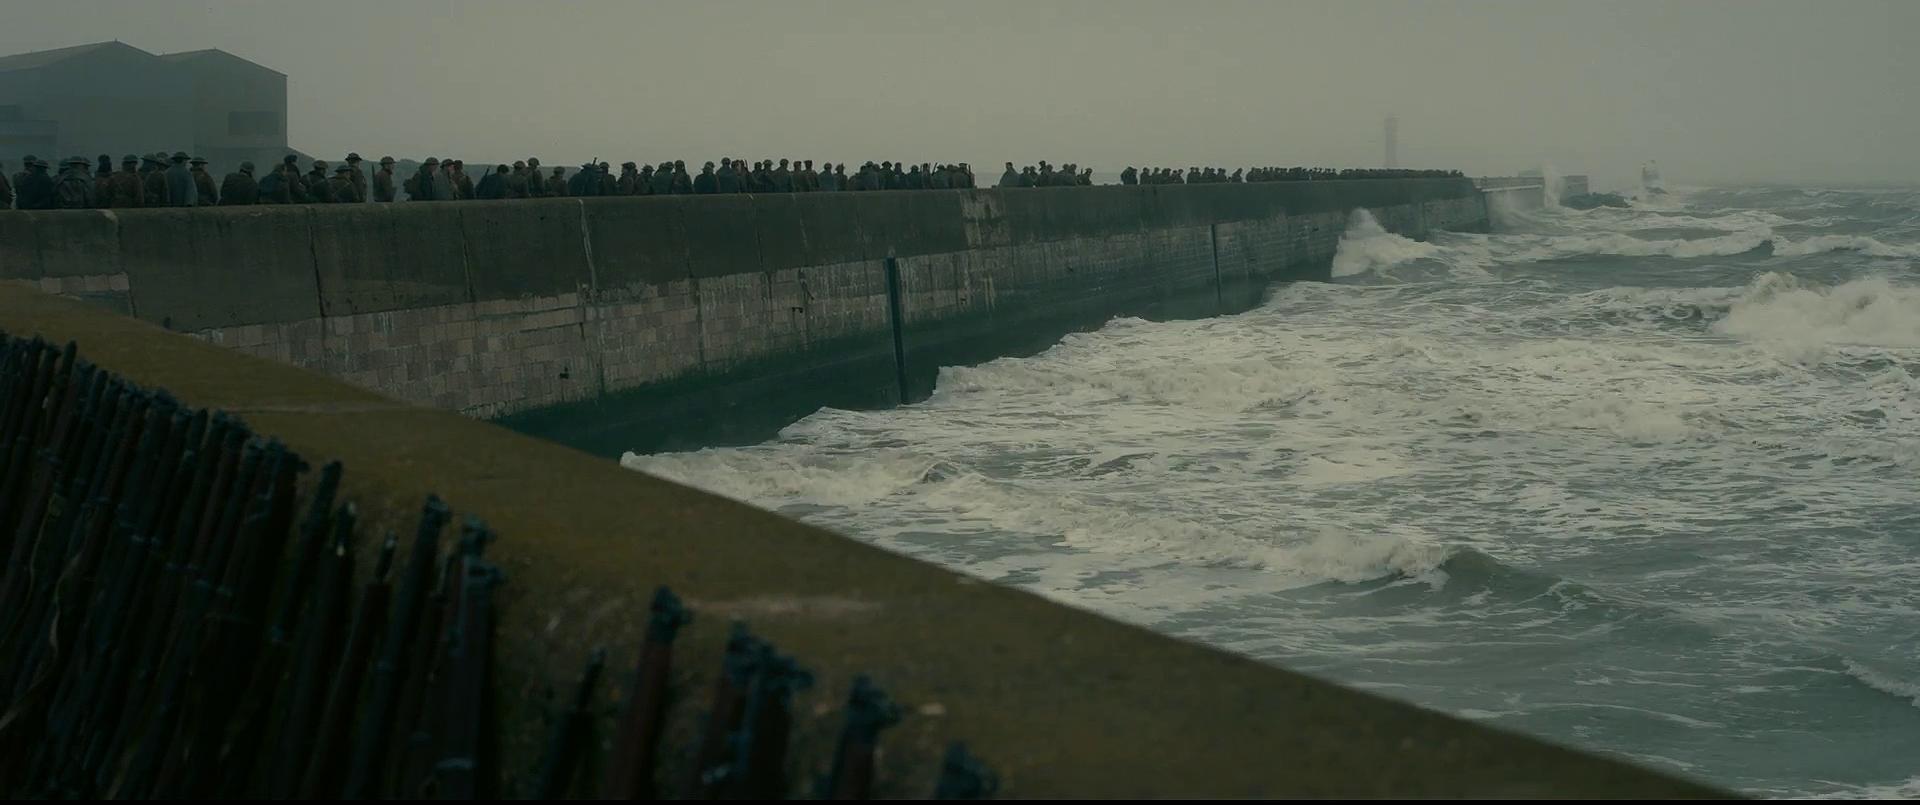 Dunkerque | Dunkirk | Crítica de cine